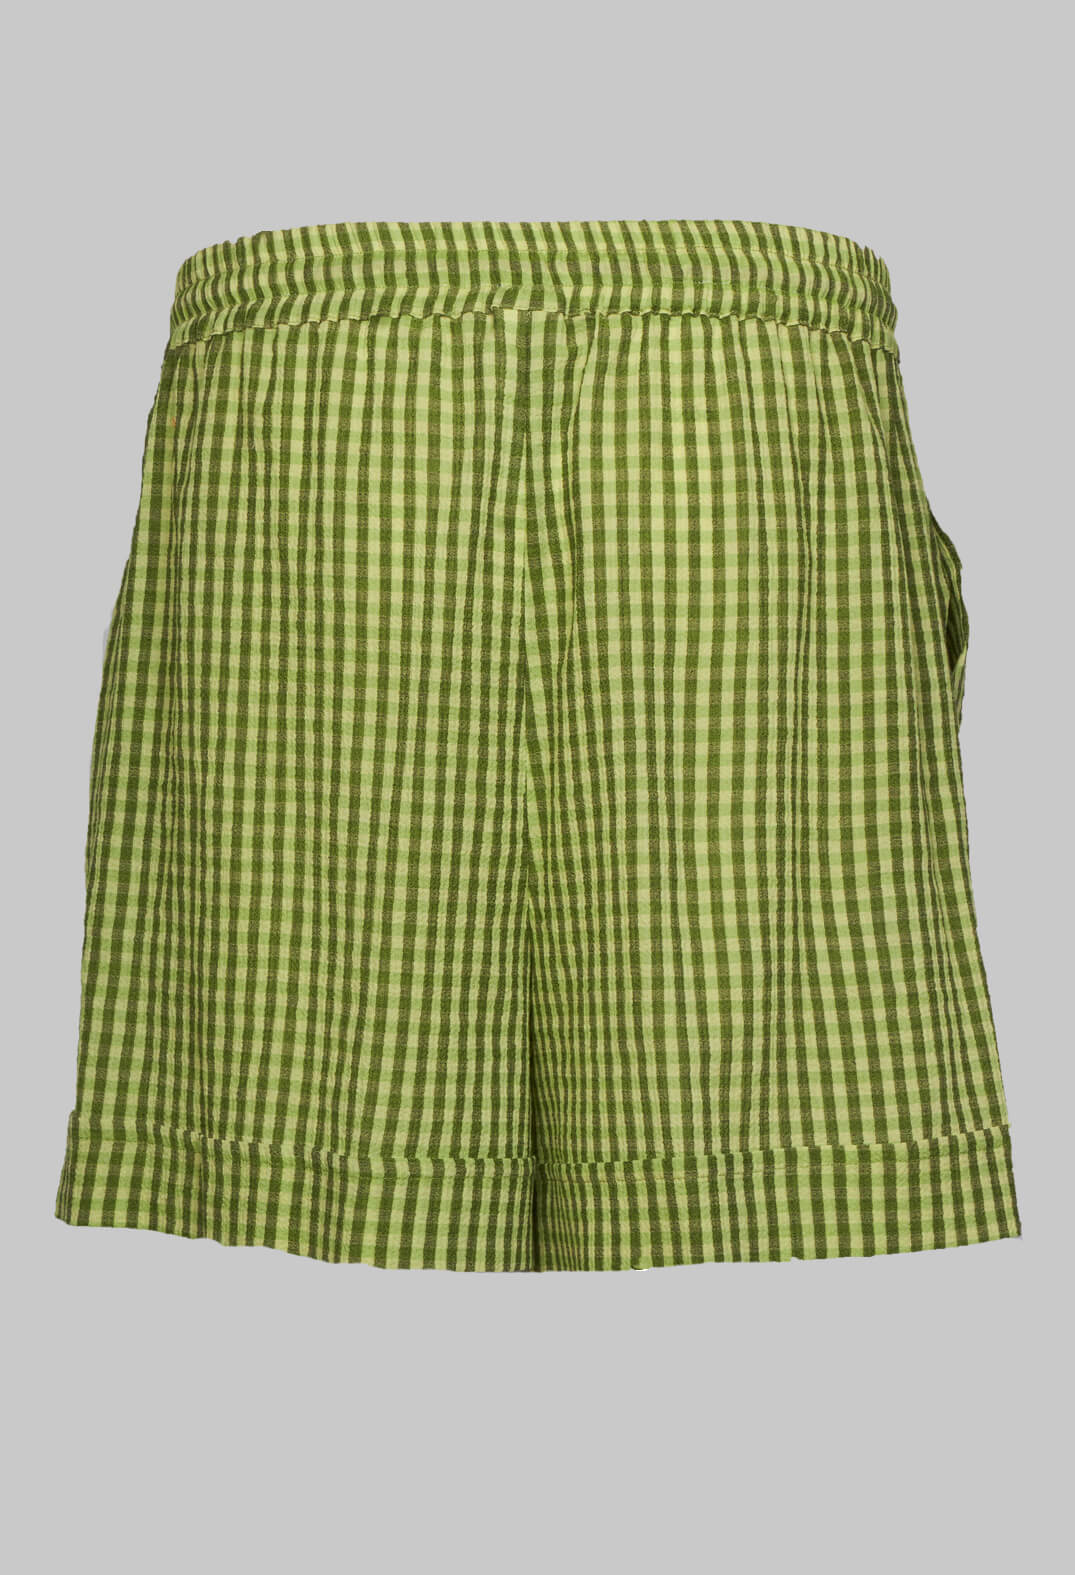 Beatrice B green check turn up shorts